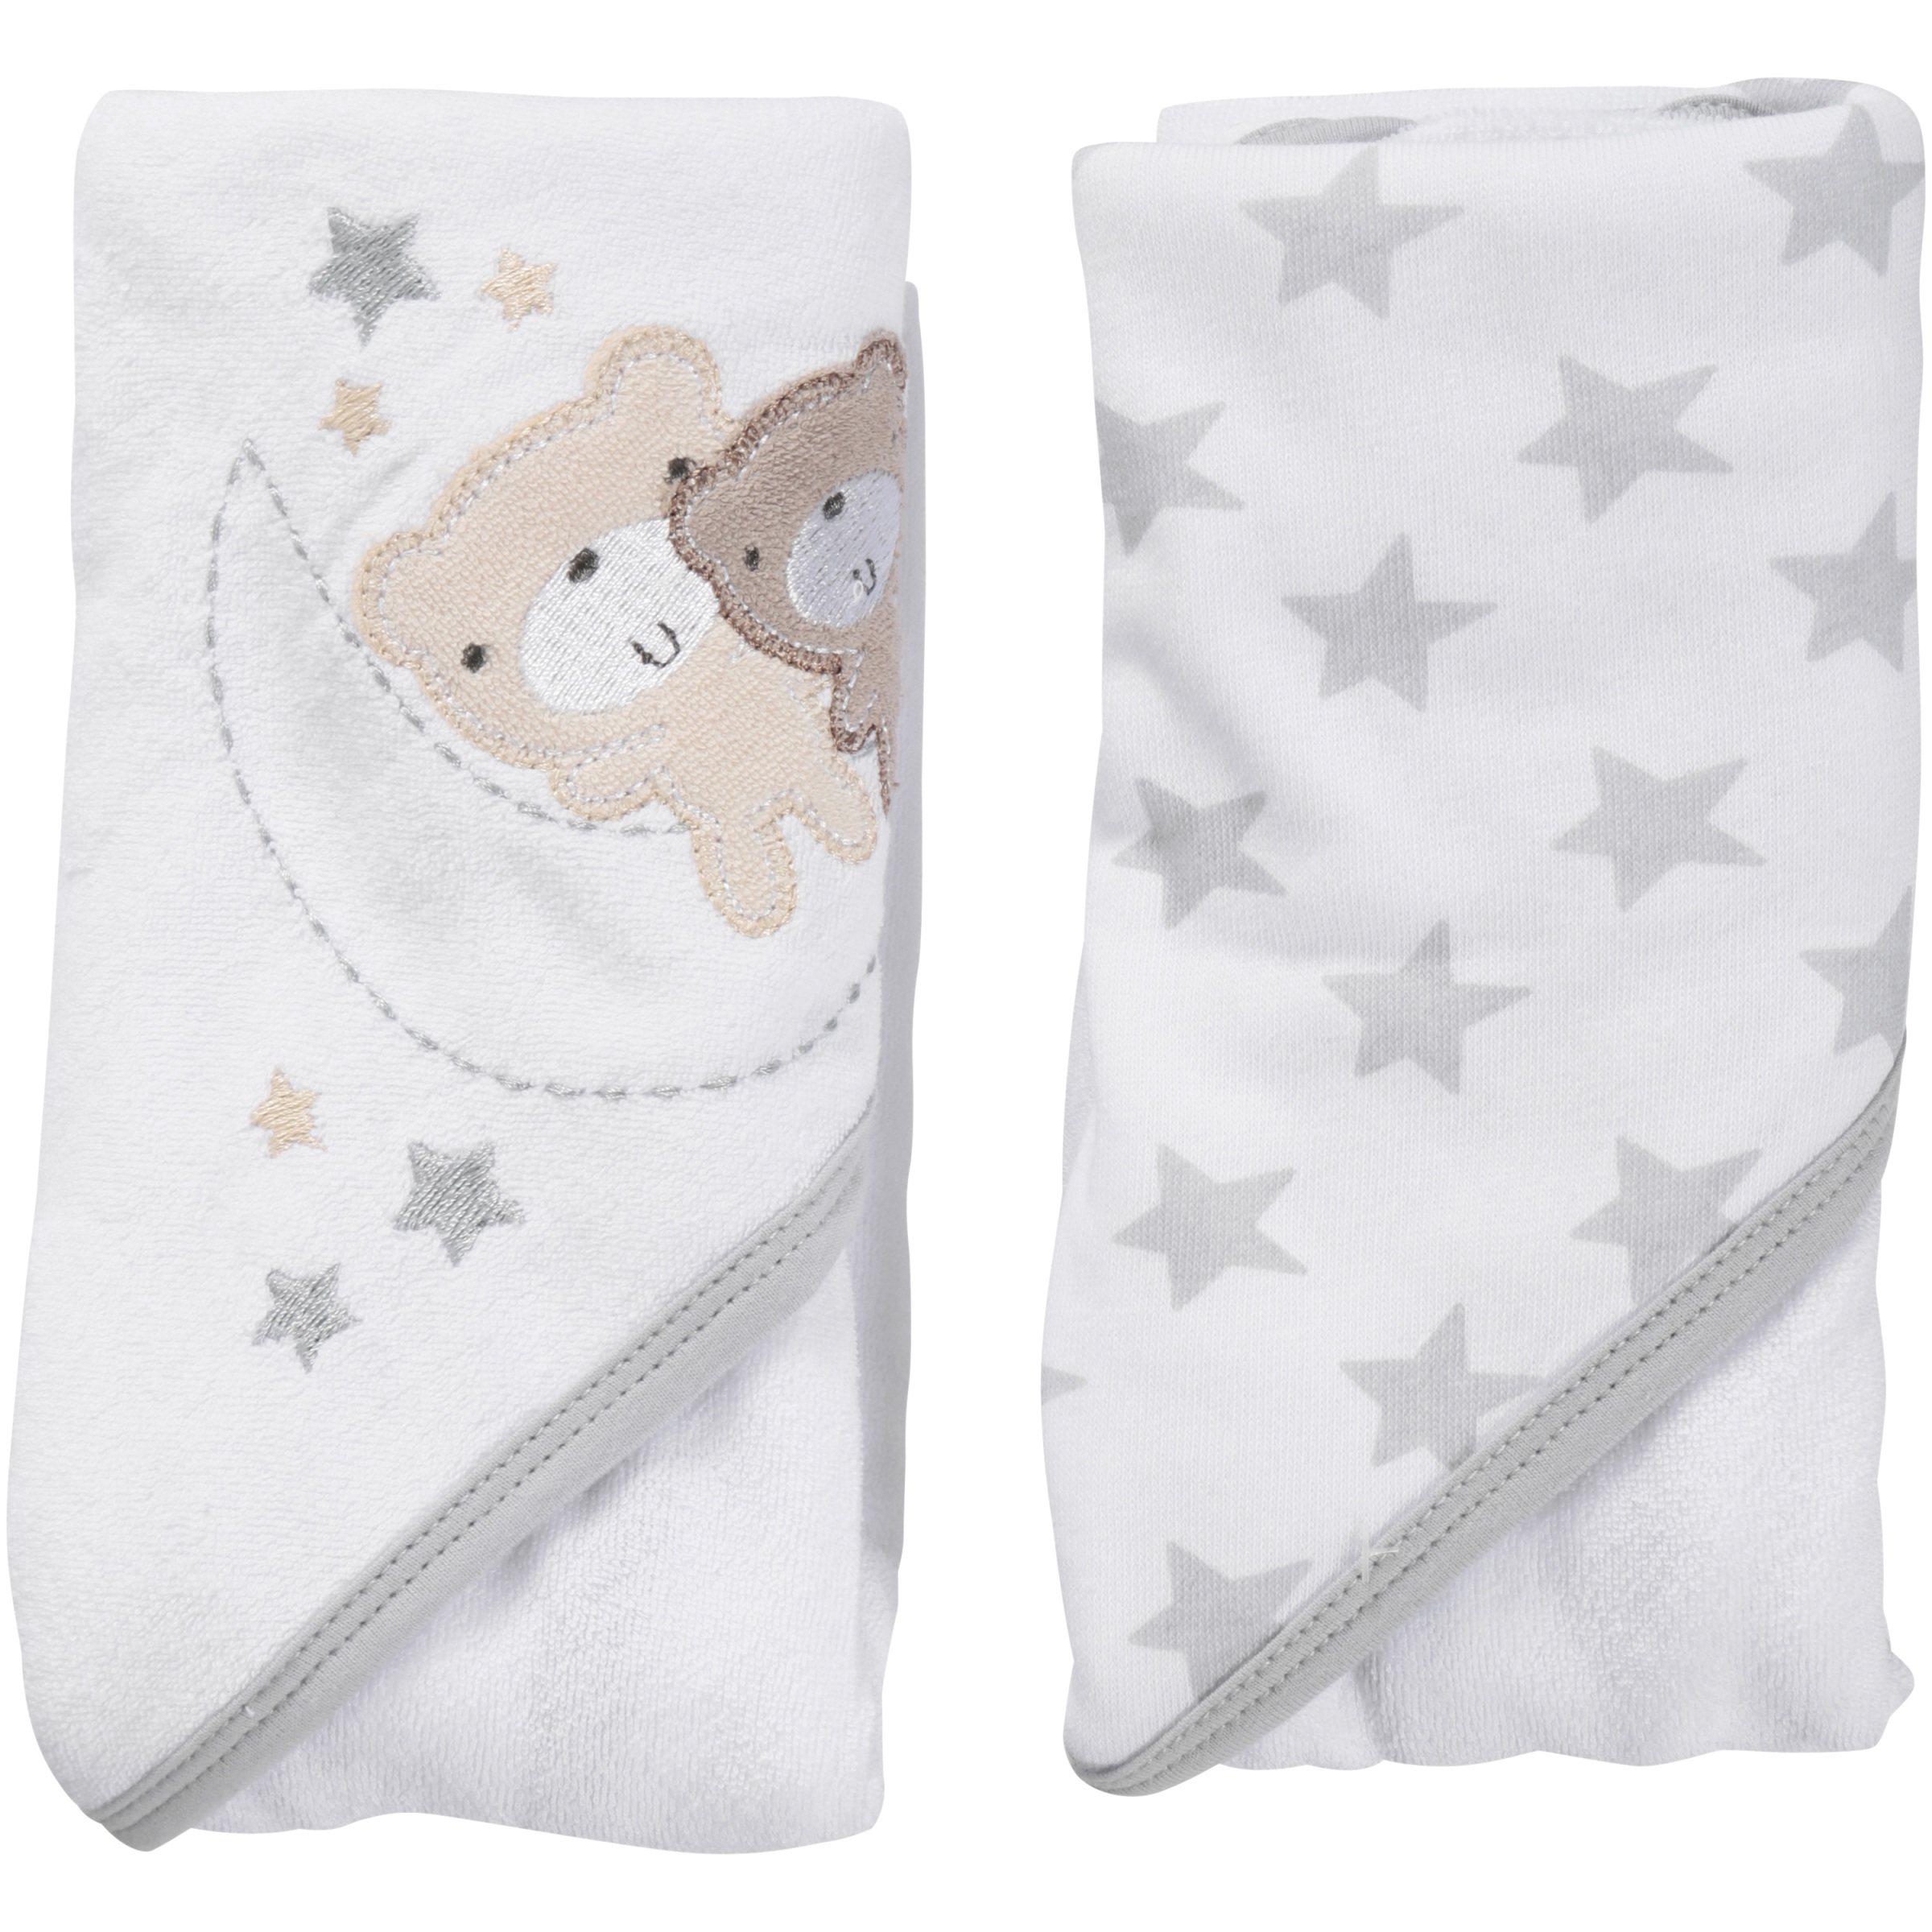 birth gift Hooded towel bath towel Hoodie for baby